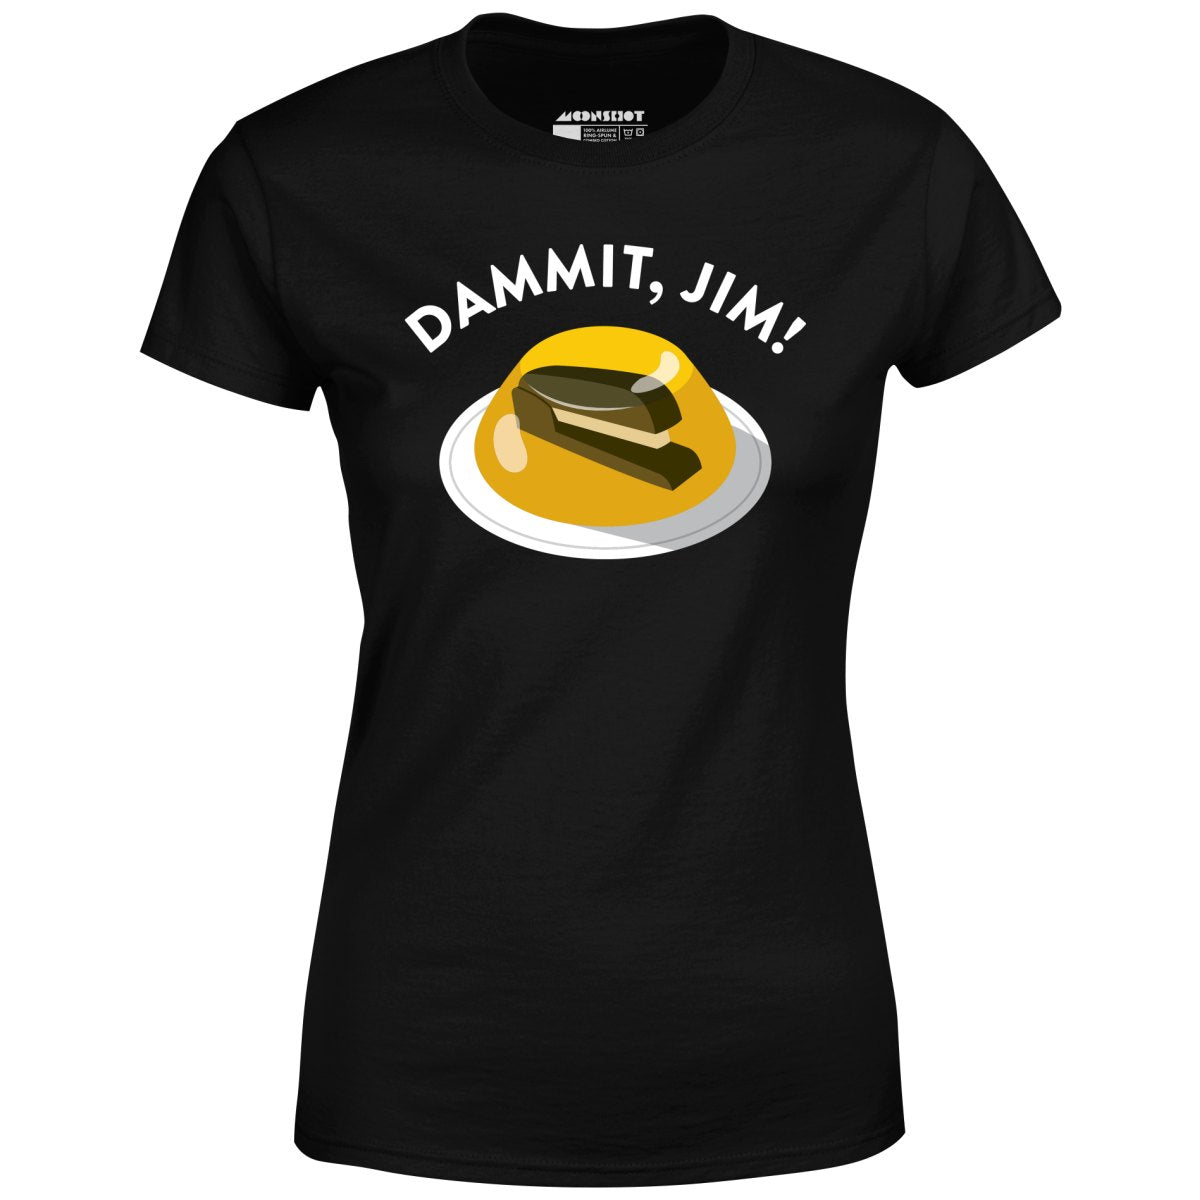 Dammit Jim - Women's T-Shirt